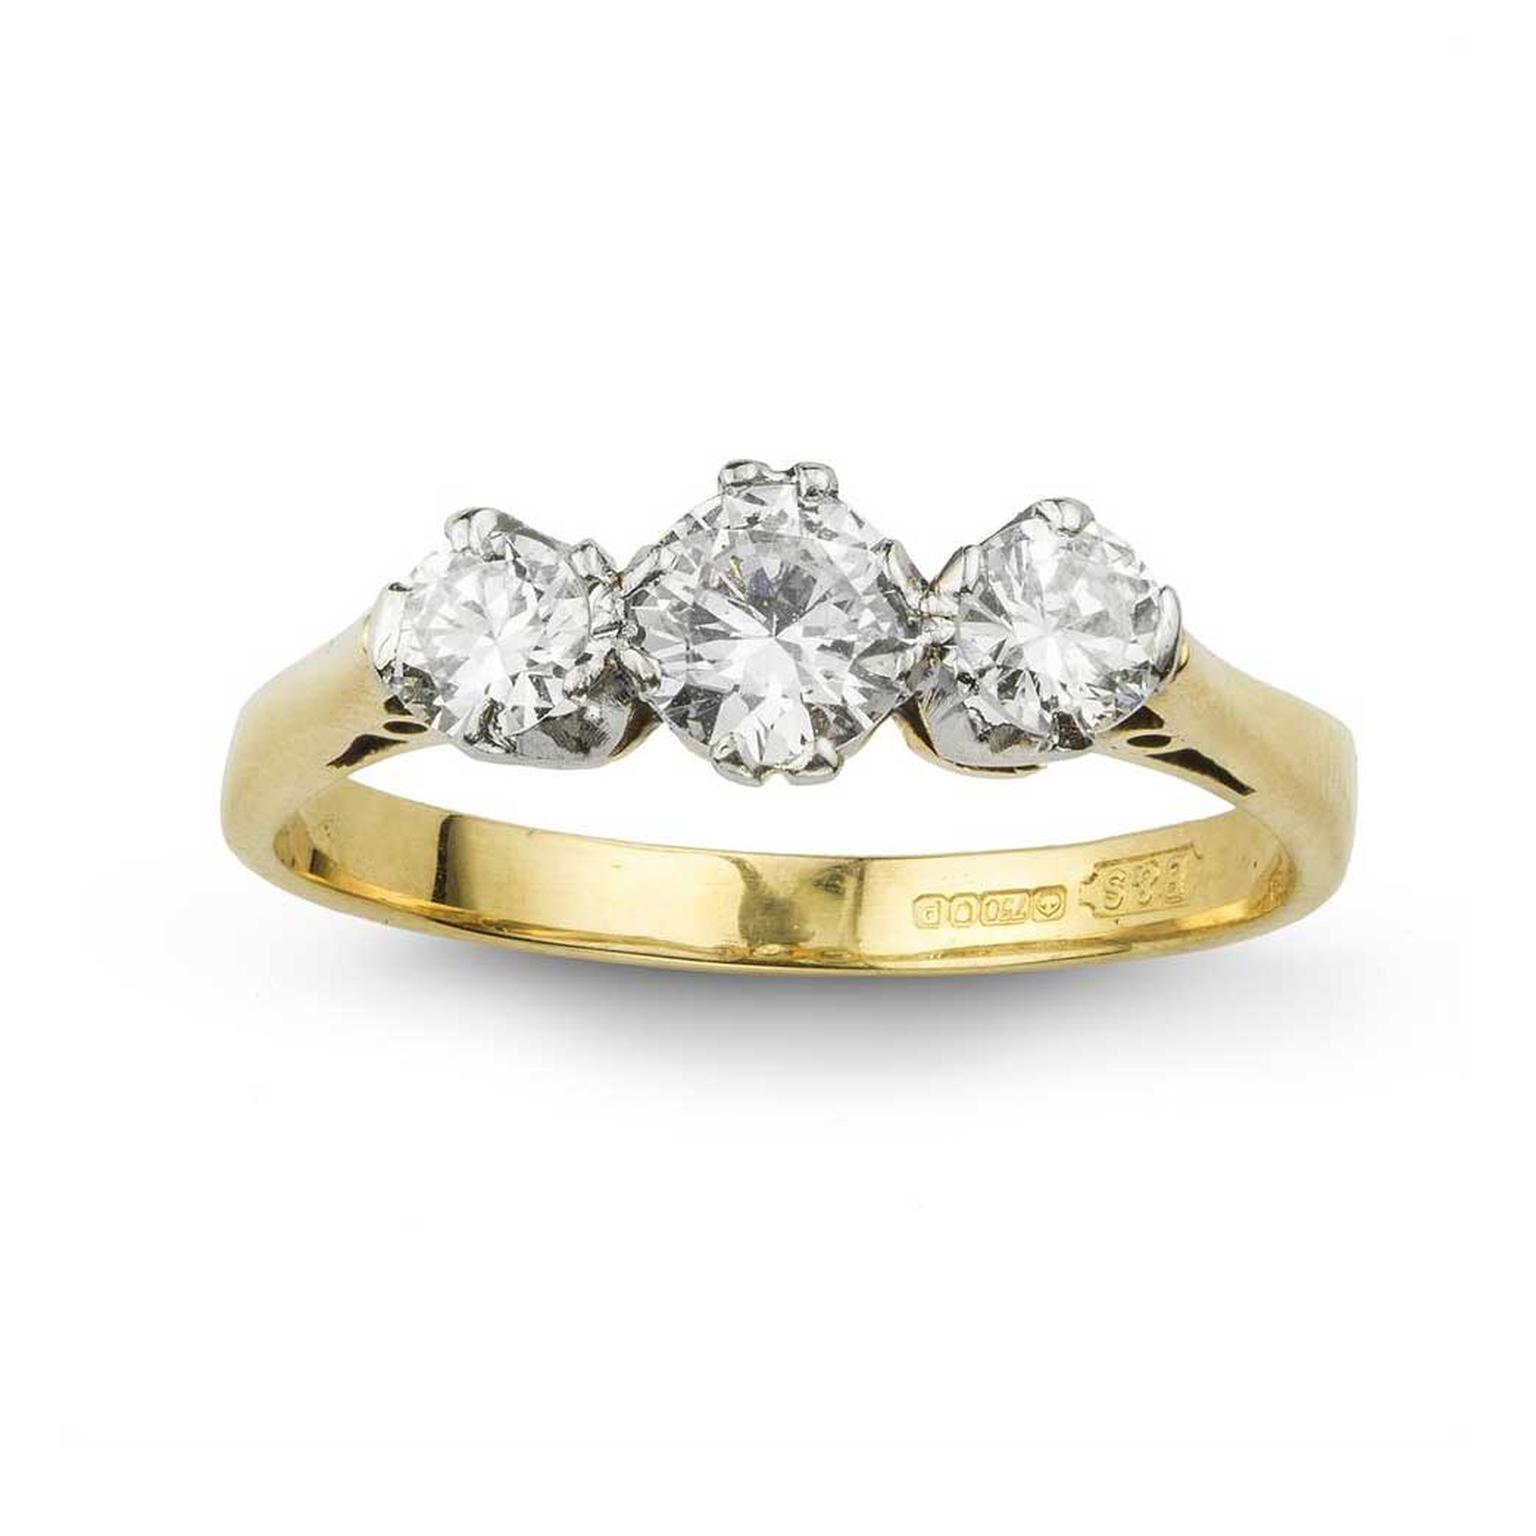 Bentley & Skinner vintage style three stone engagement ring